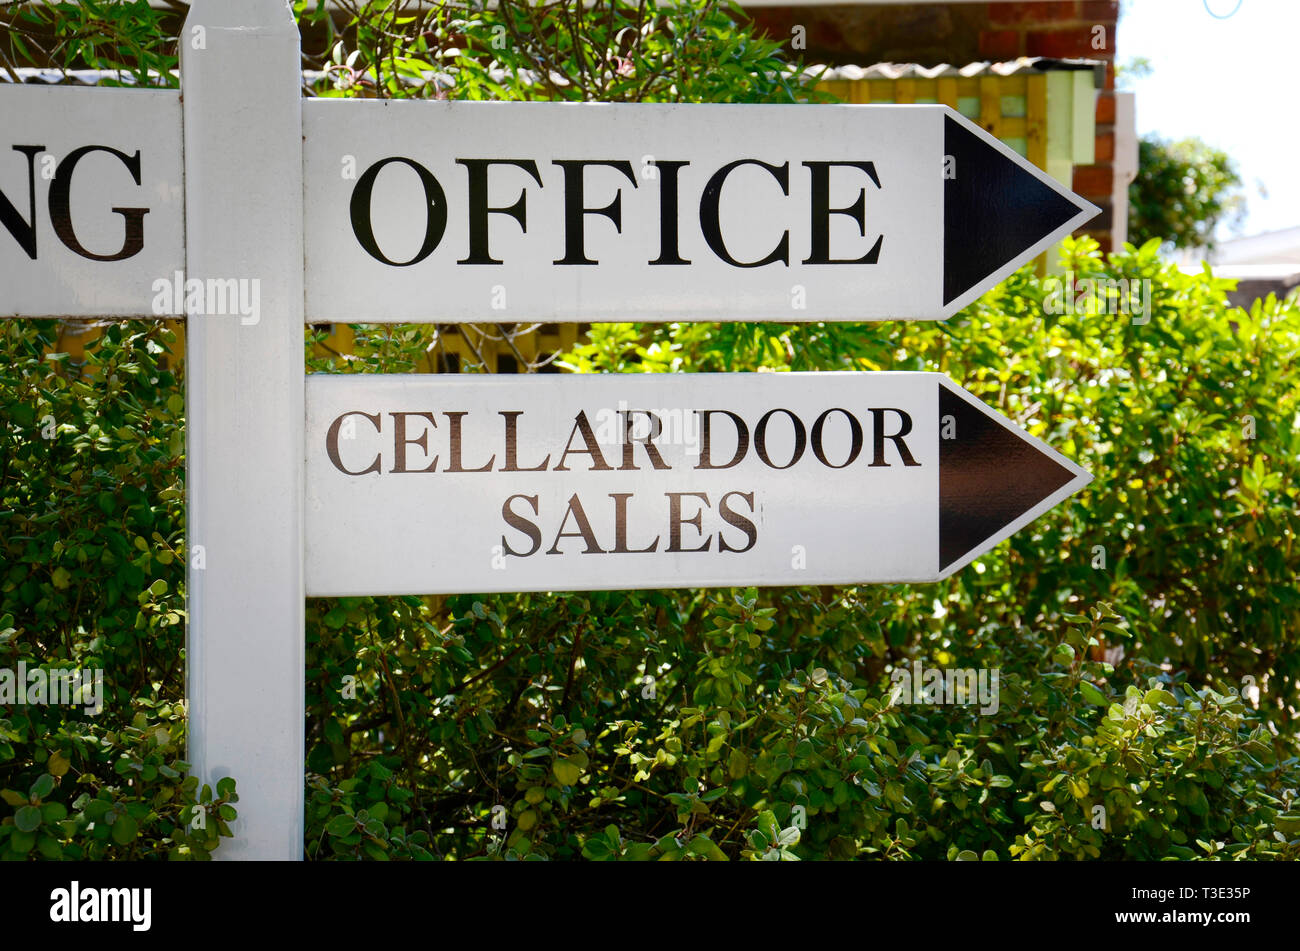 Cellar door sales sign at winery entrance, close up. Stock Photo